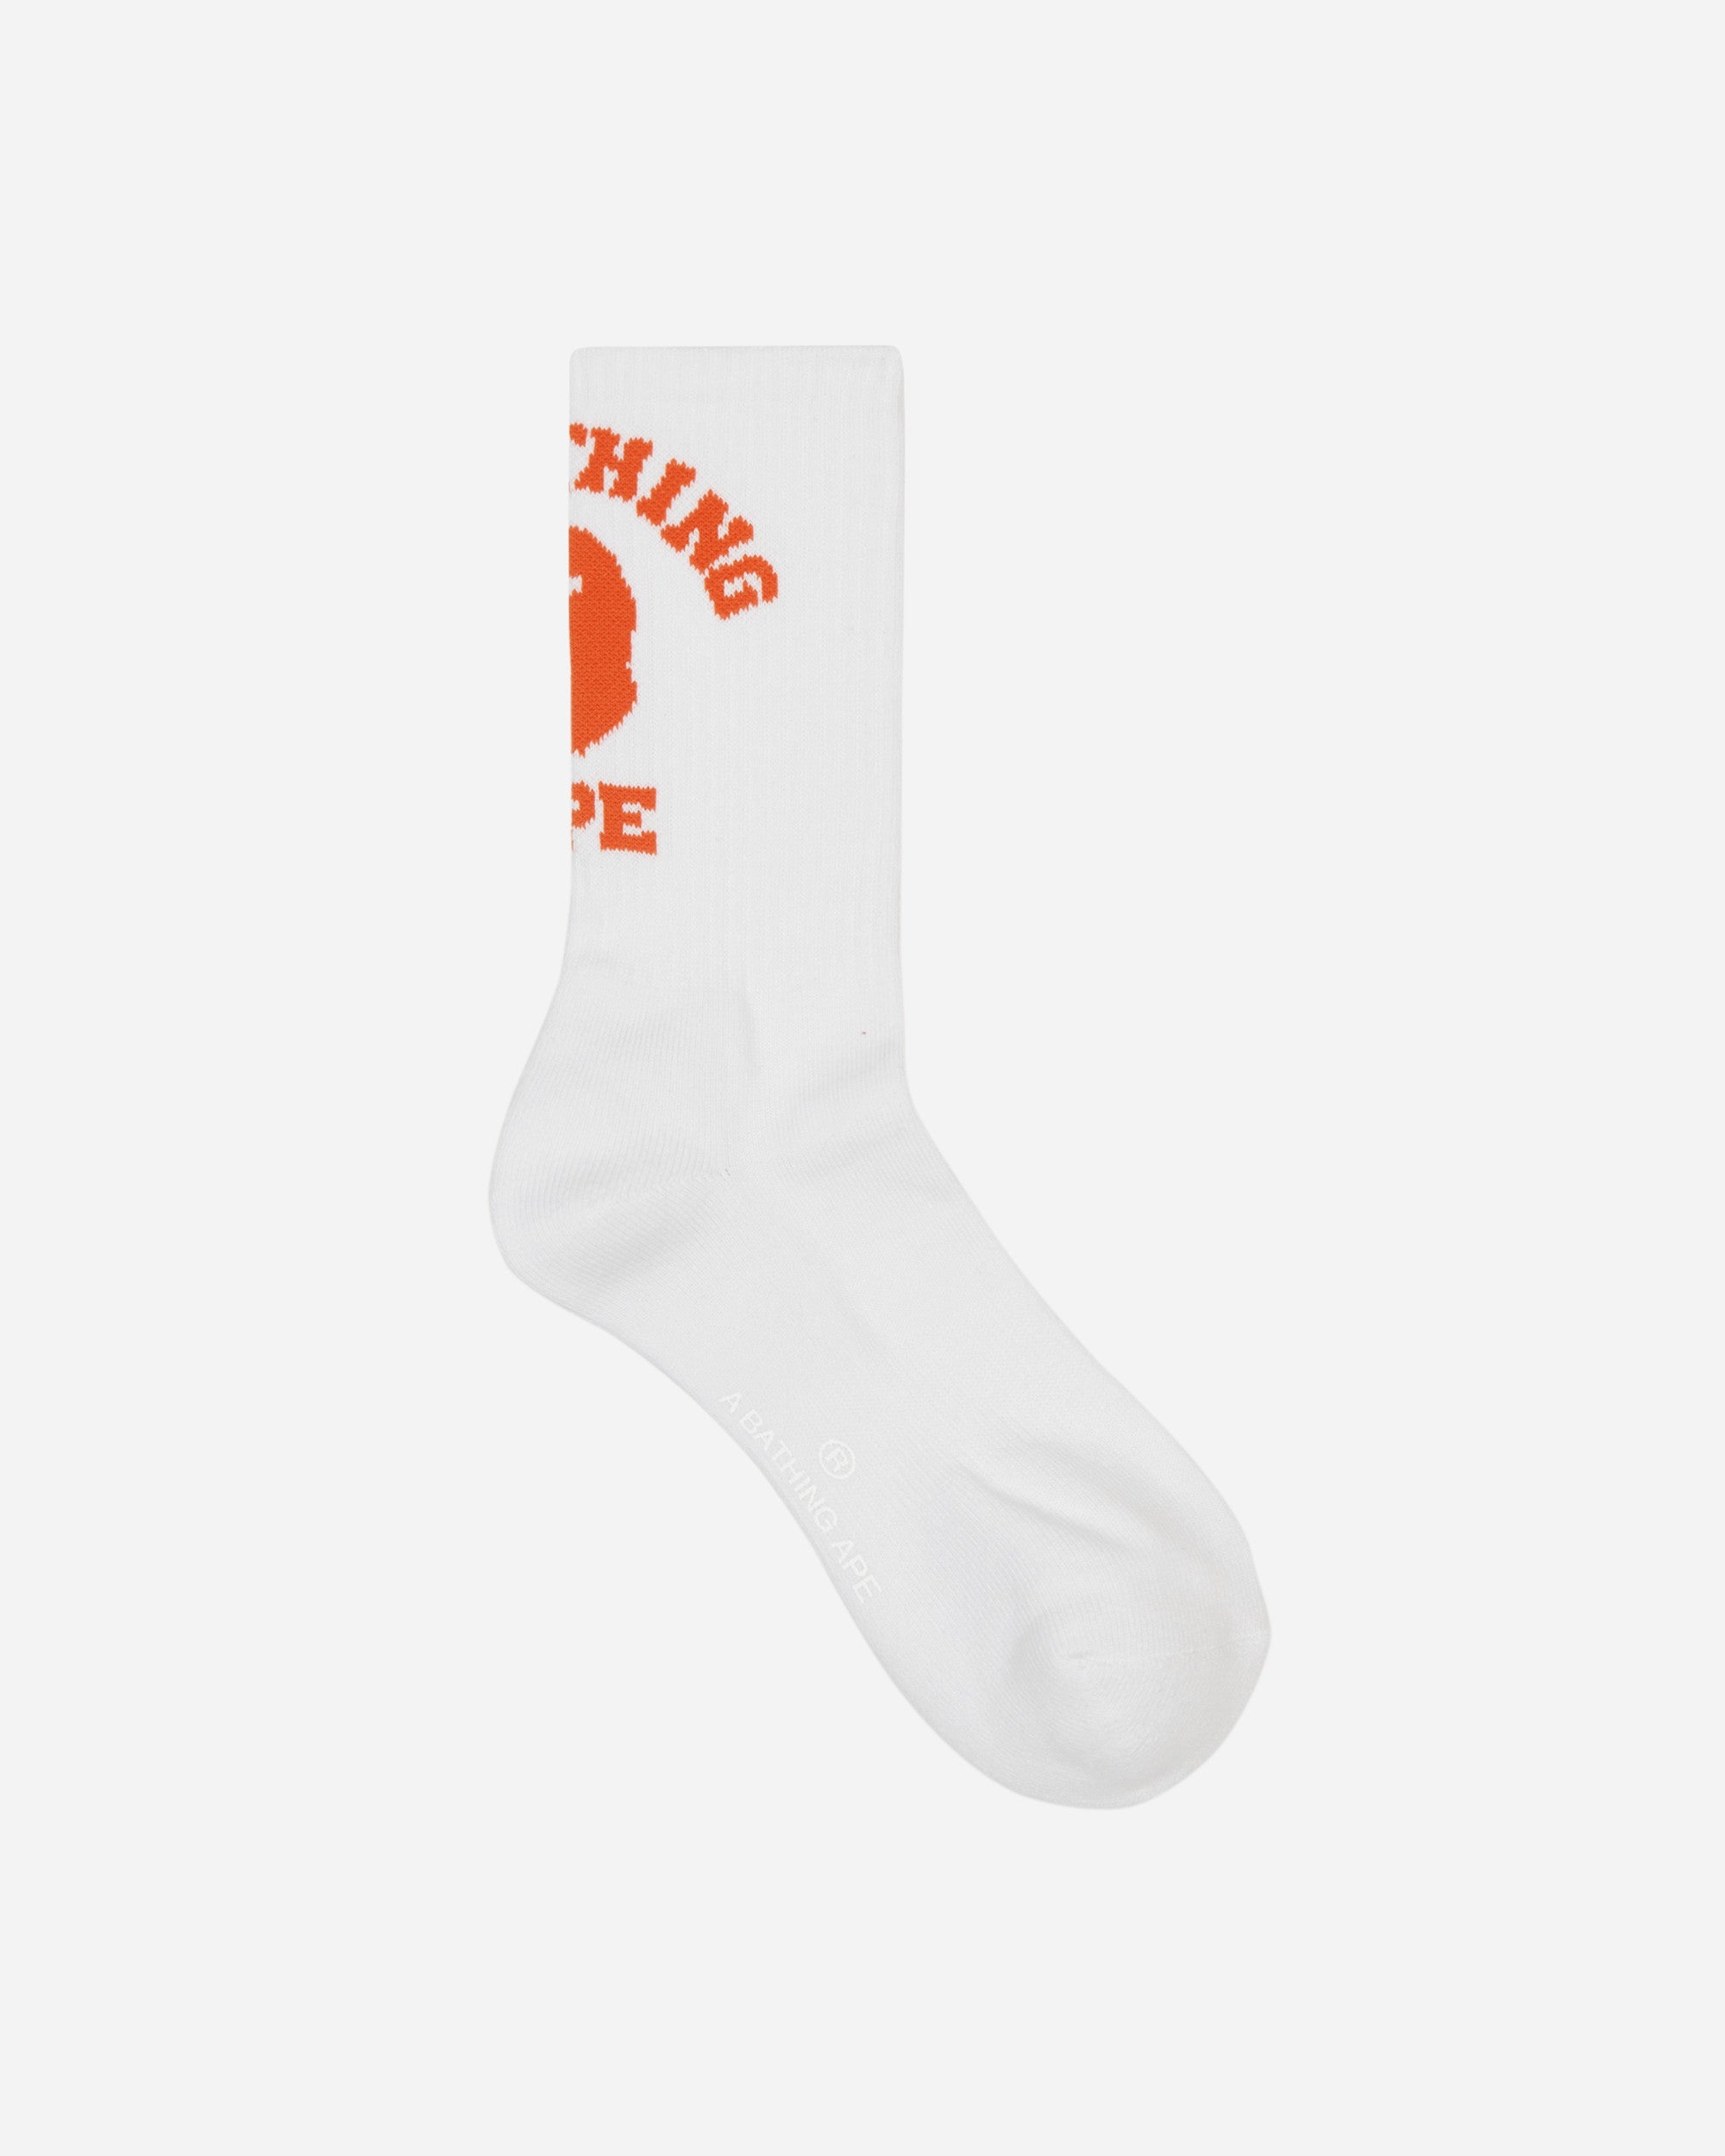 College Socks Orange - 1